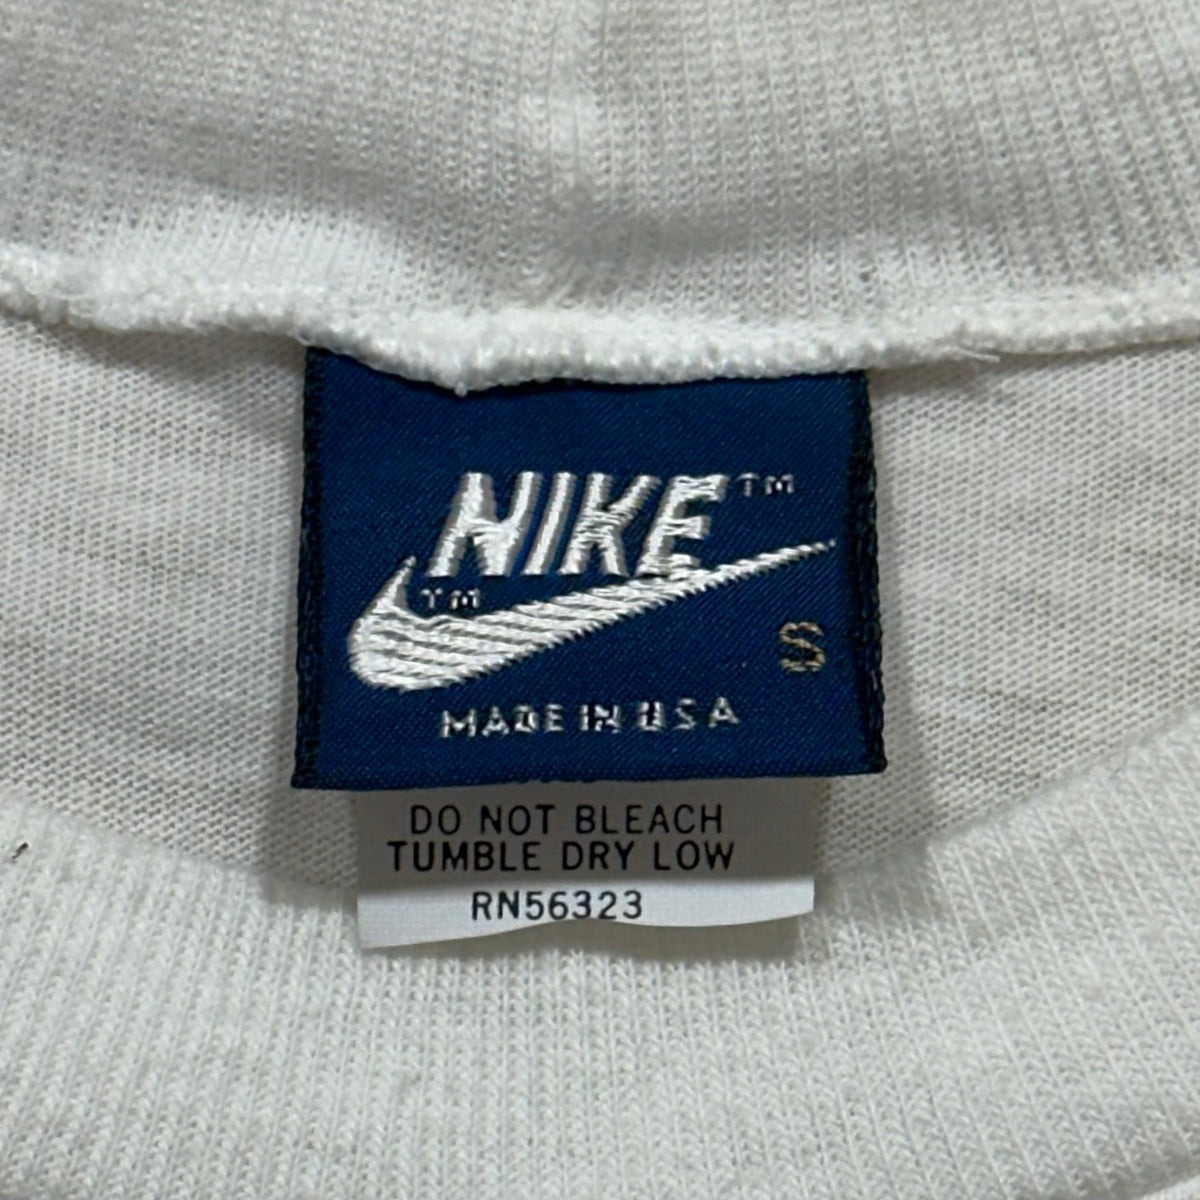 Vintage 80s Nike Hollywood T-Shirt Blue Tag 1980s Sportswear